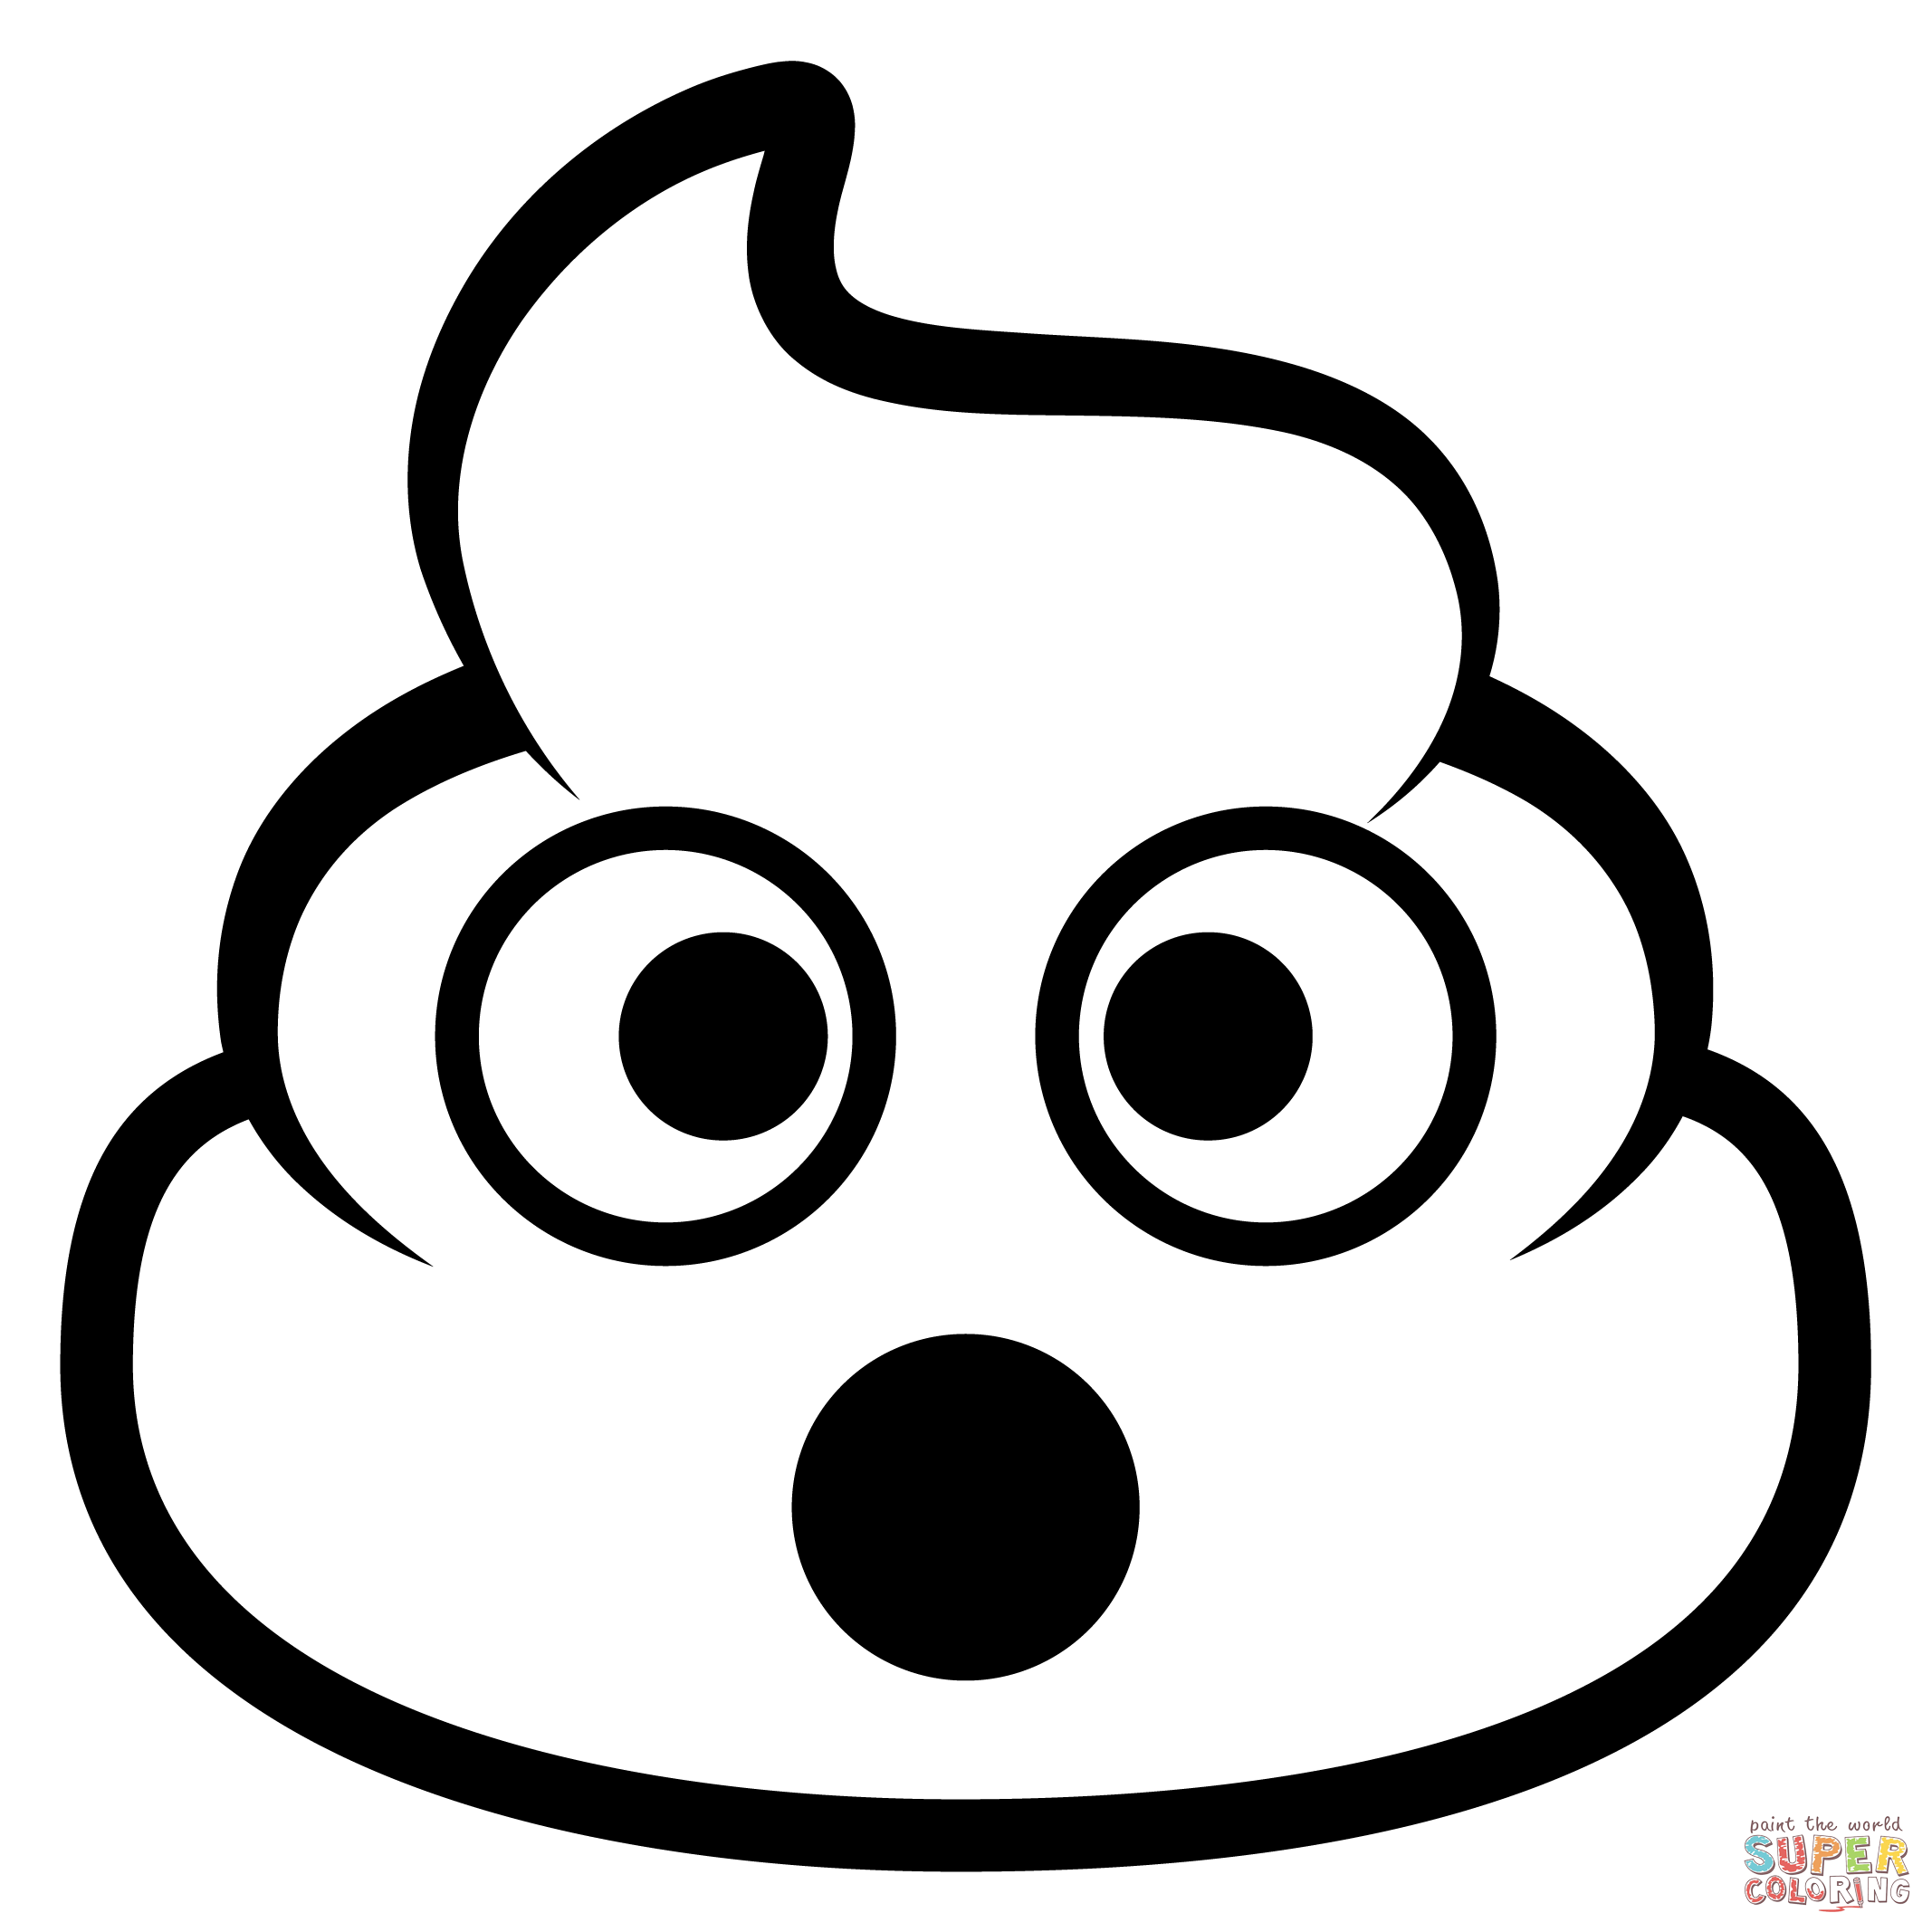 Pile of poo emoji coloring page free printable coloring pages